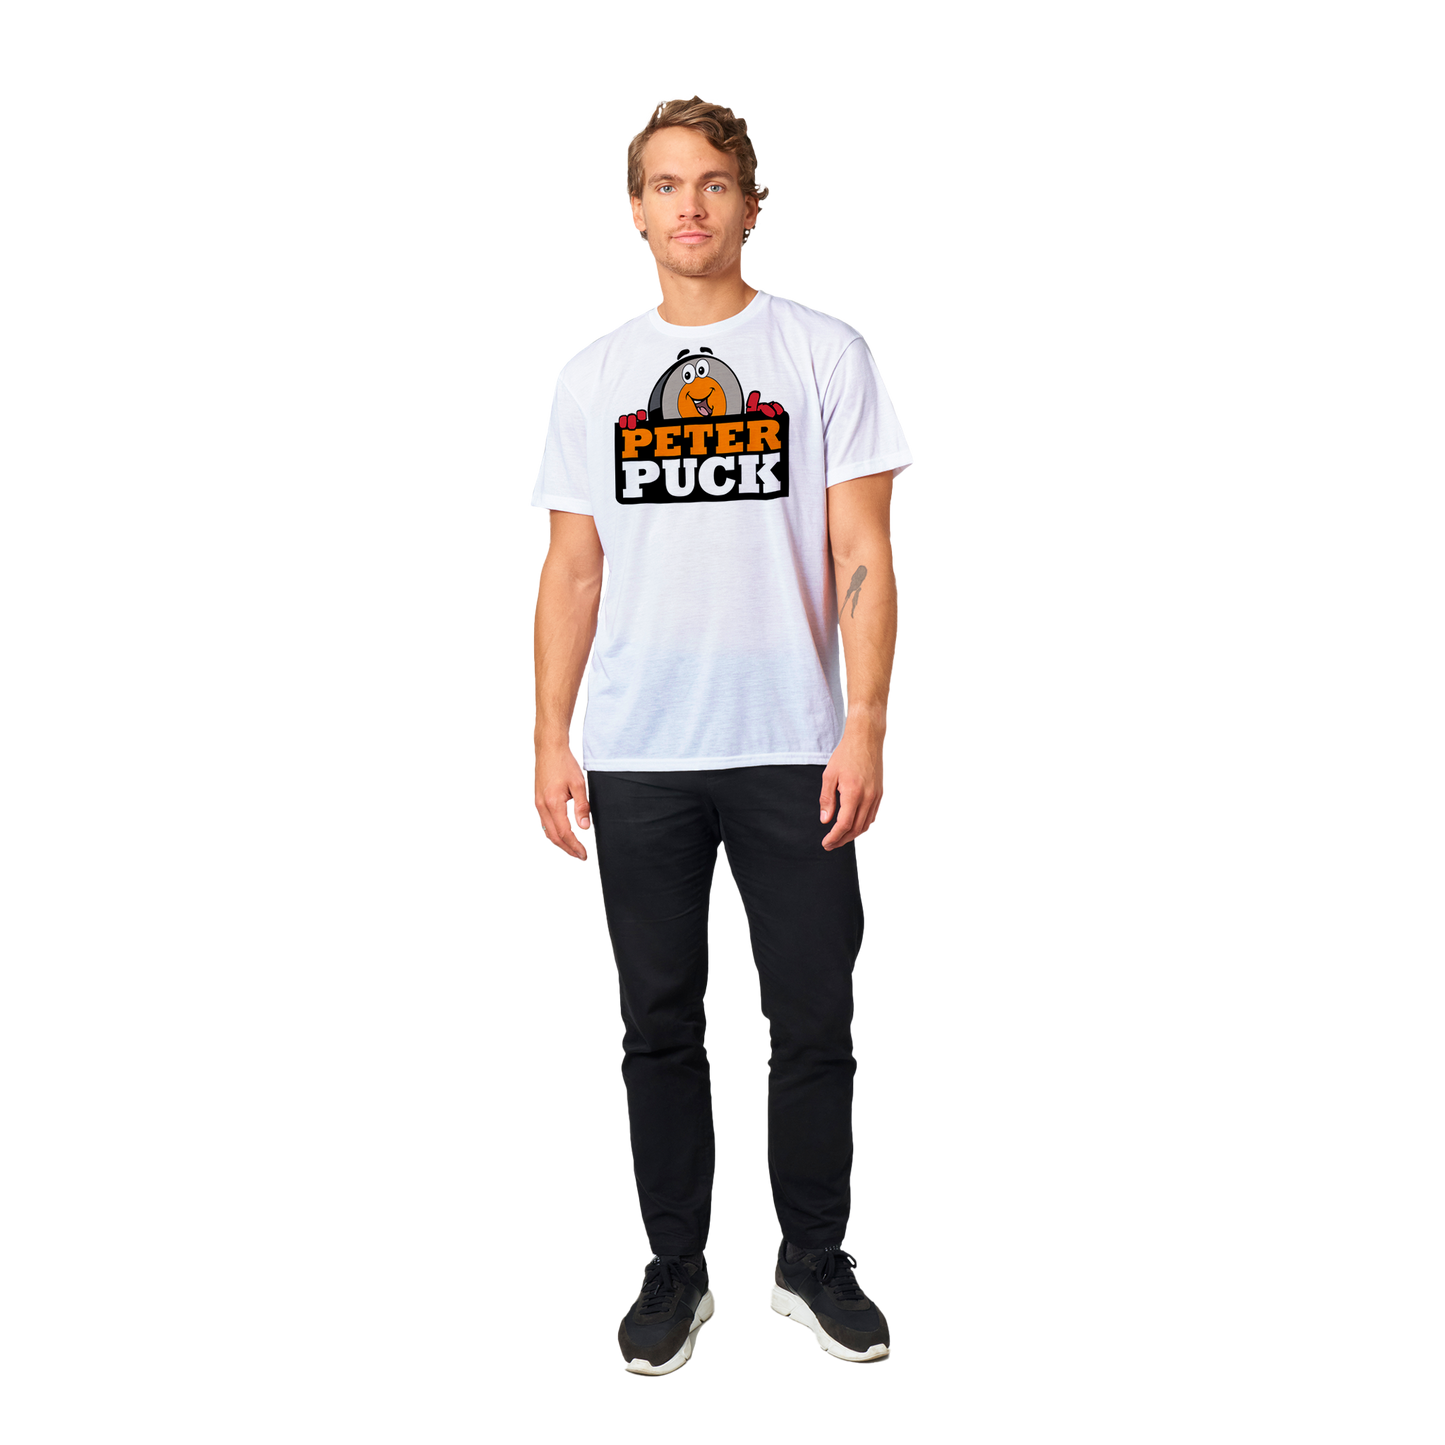 Peter Puck Peek Mens Performance Crewneck T-shirt